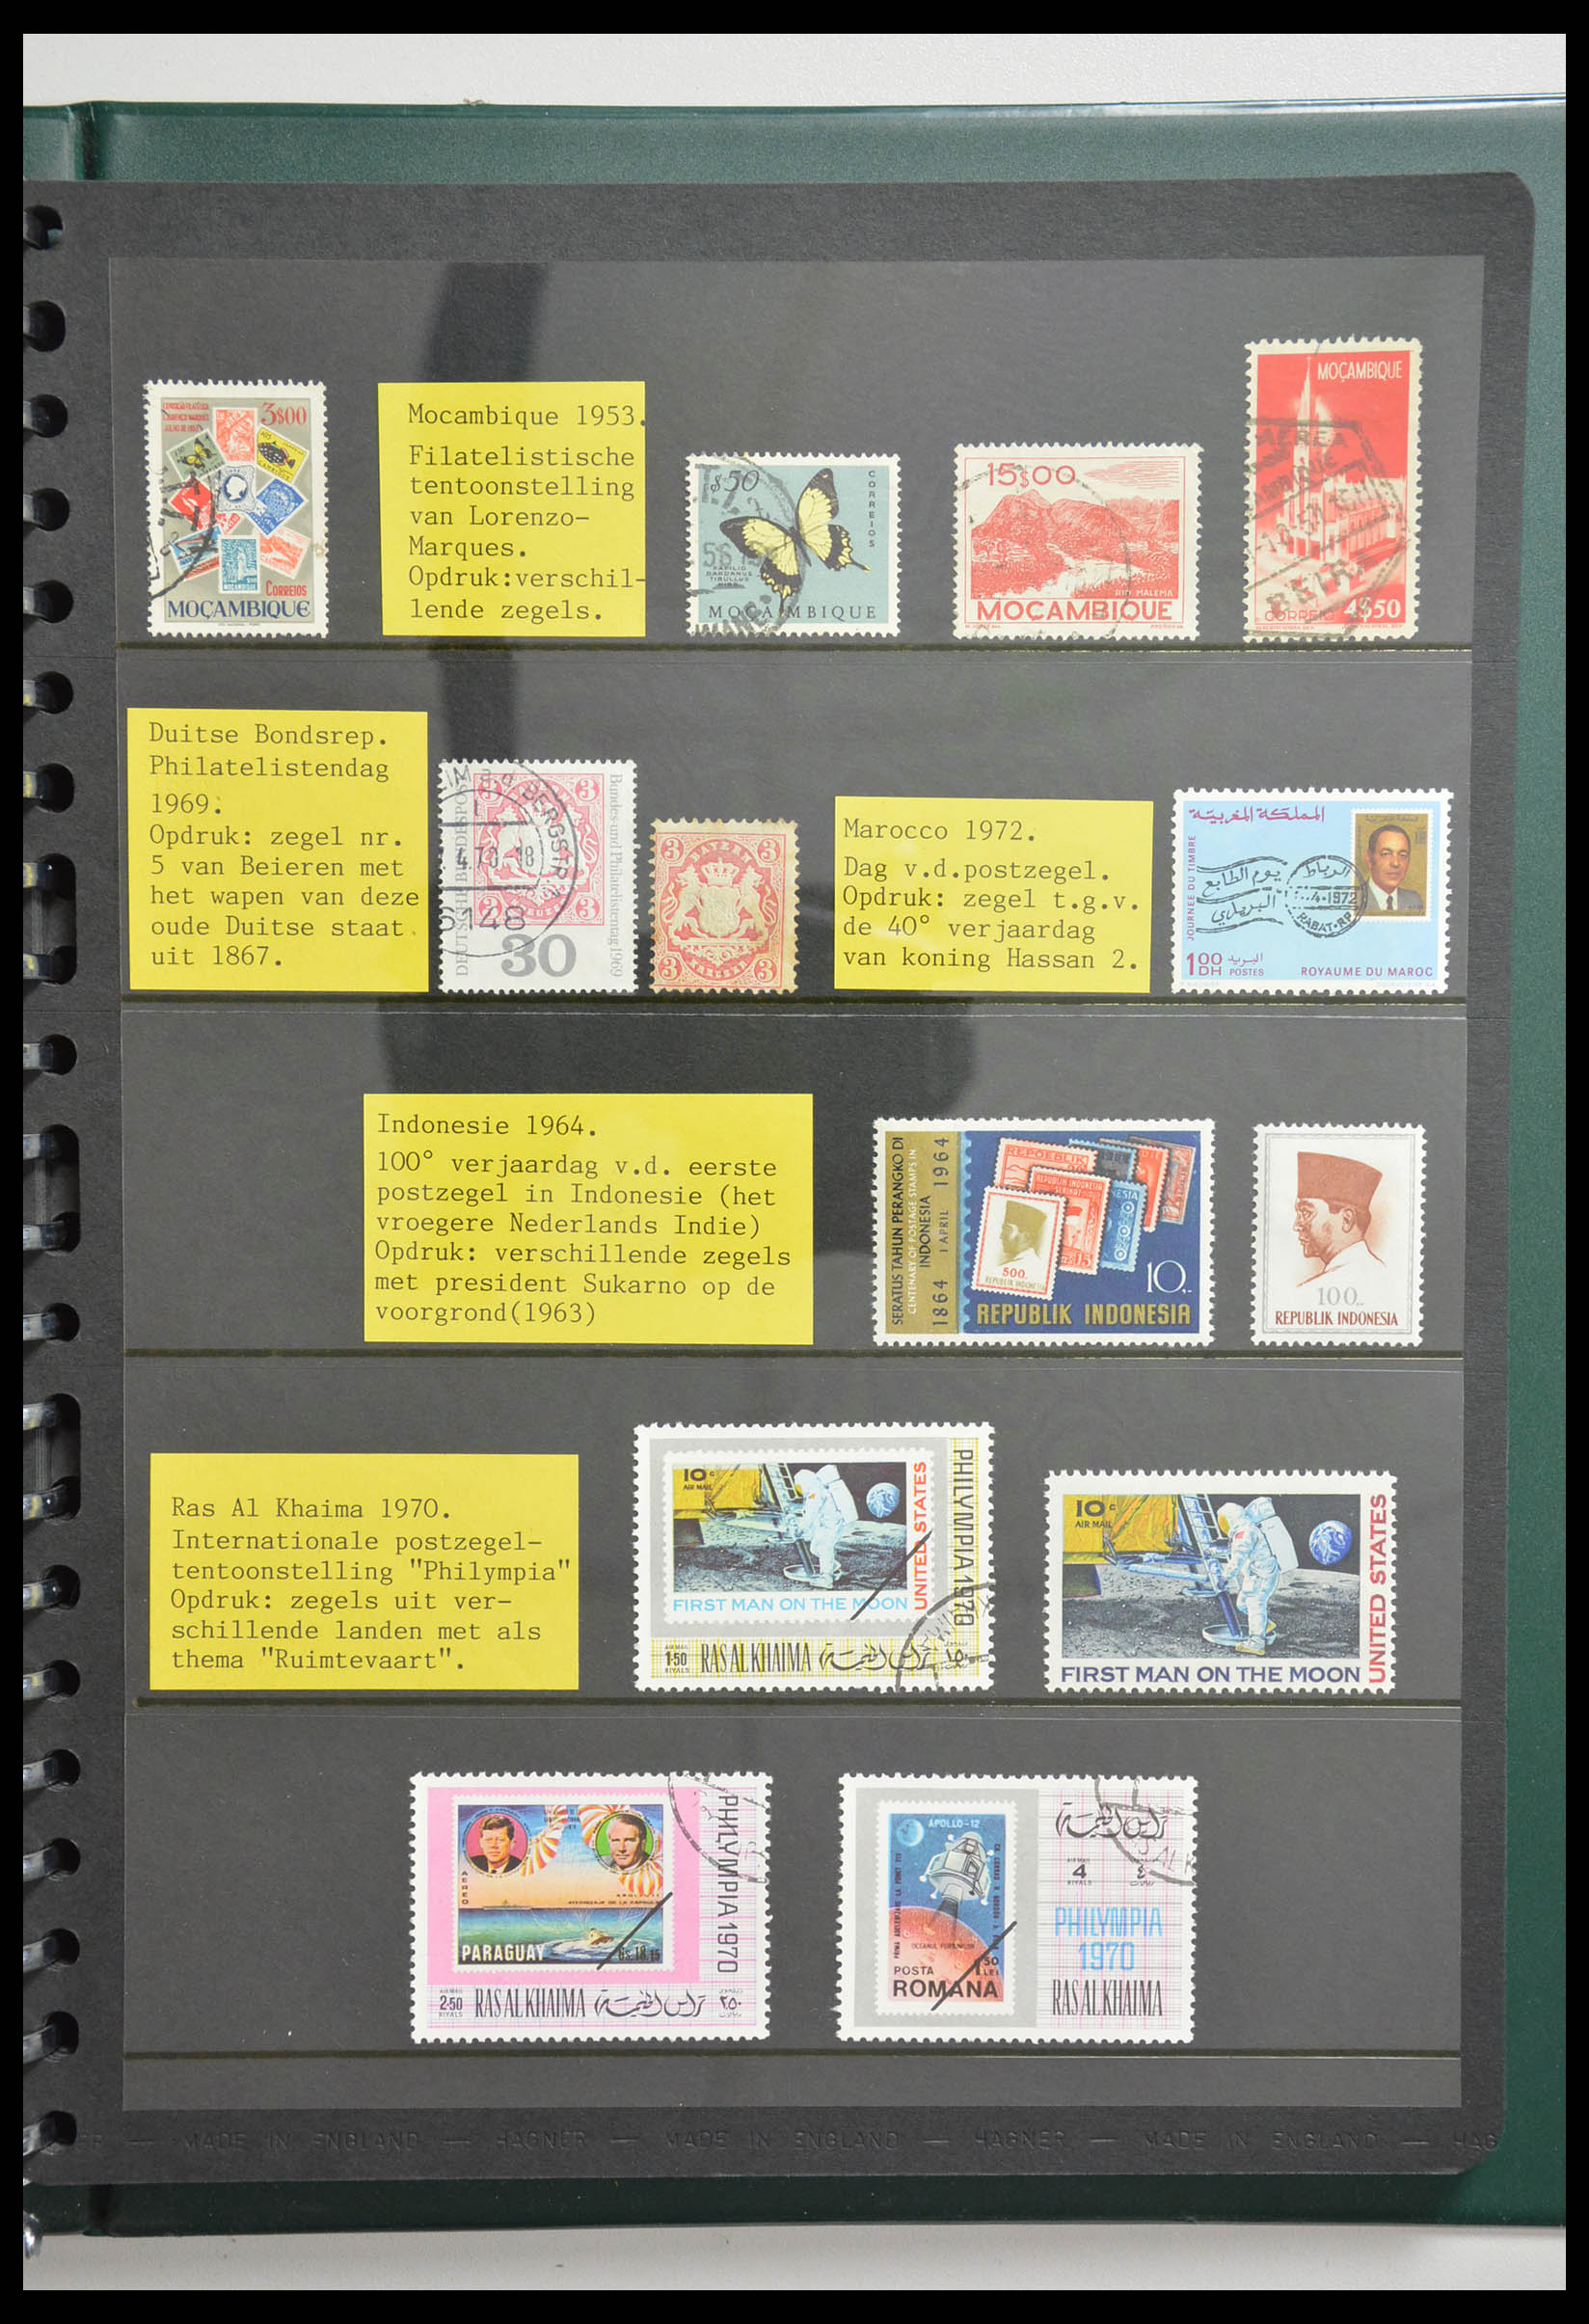 28337 113 - 28337 Postzegel op postzegel 1840-2001.